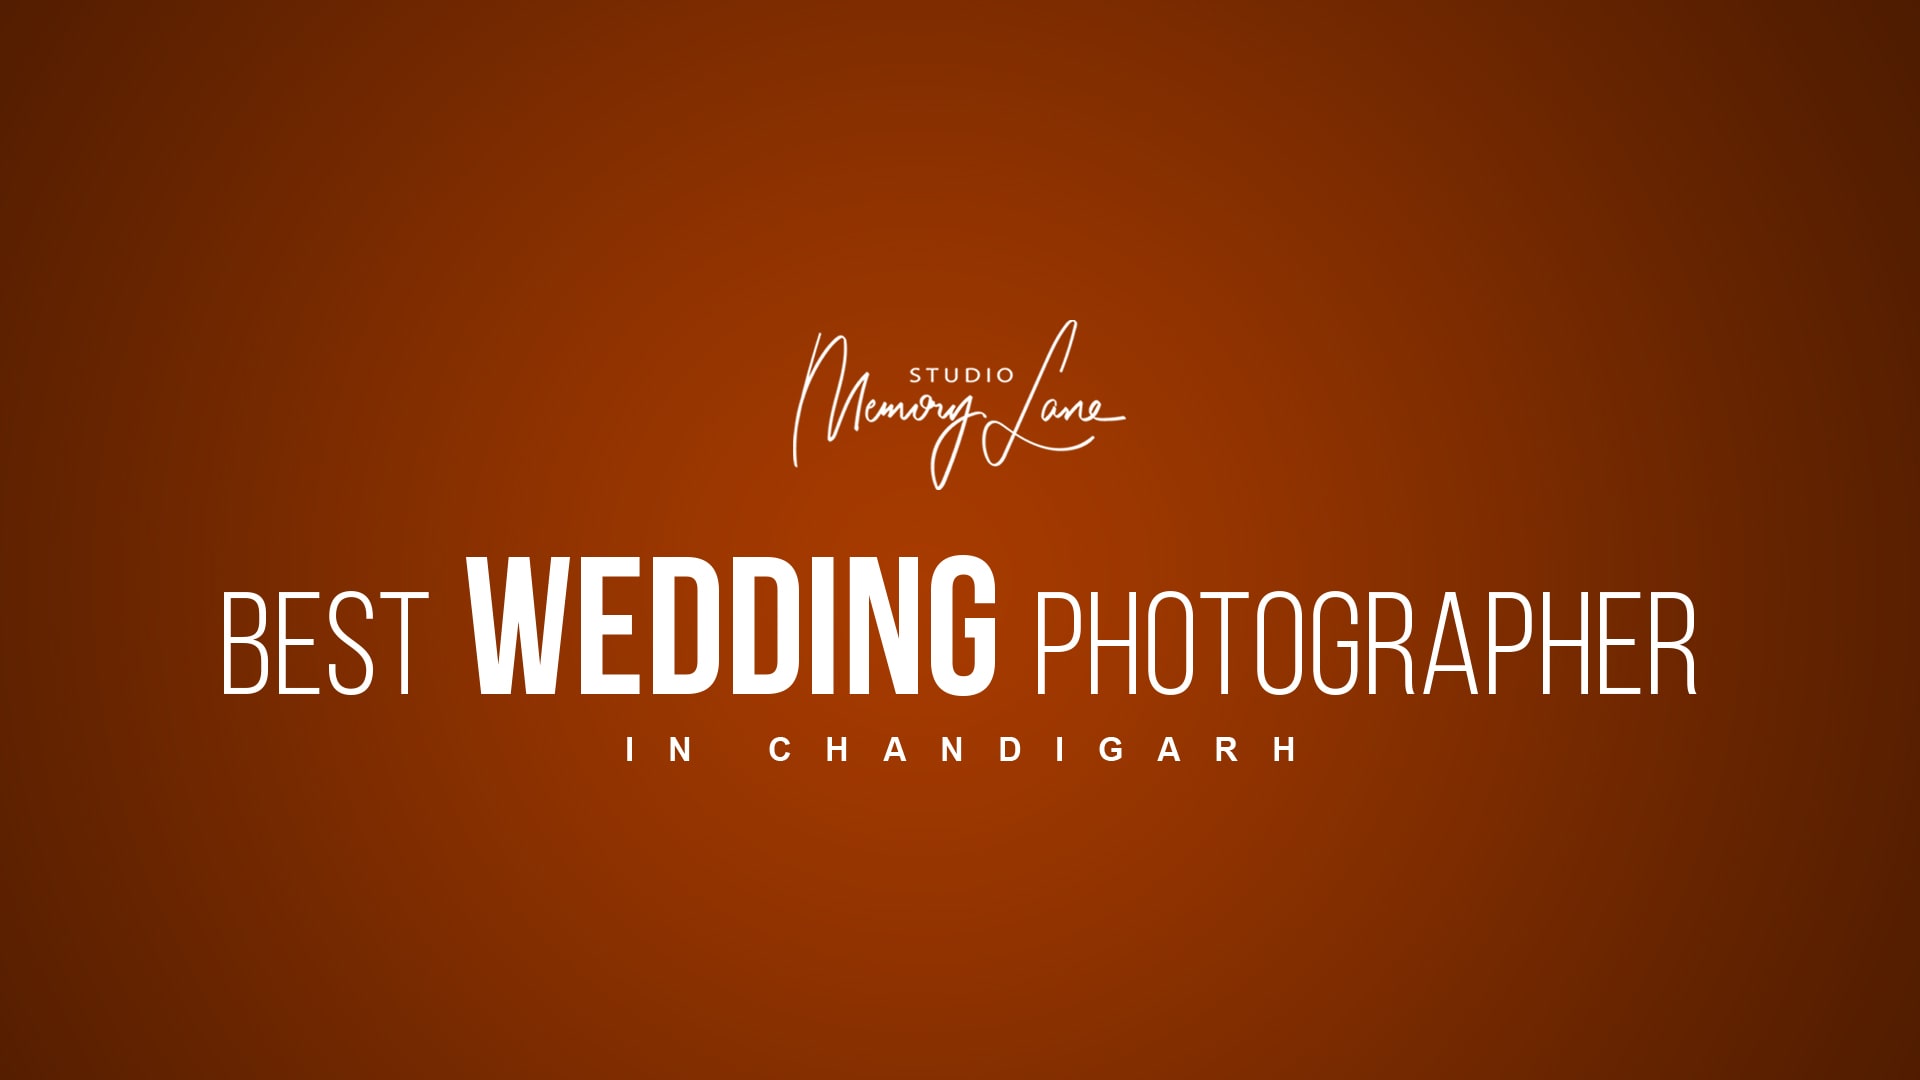 Best Wedding Photographer in Chandigarh – Studio Memory Lane